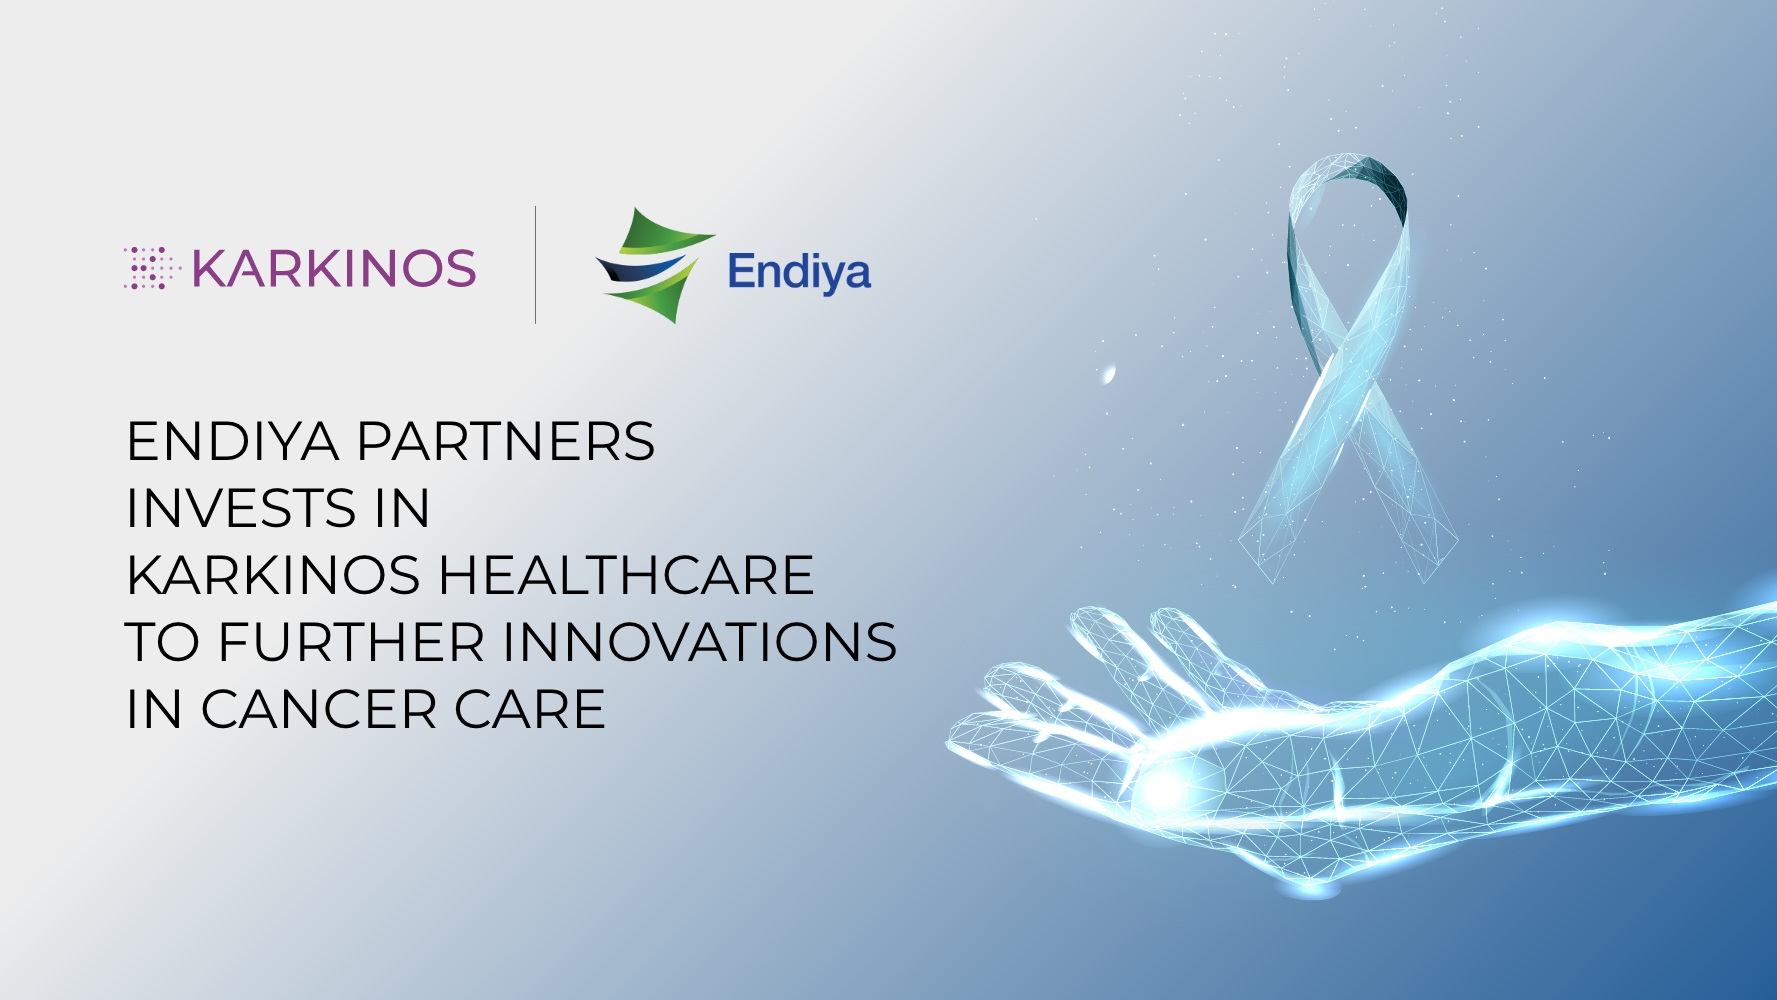 Karkinos Healthcare raises funds from Endiya Partners